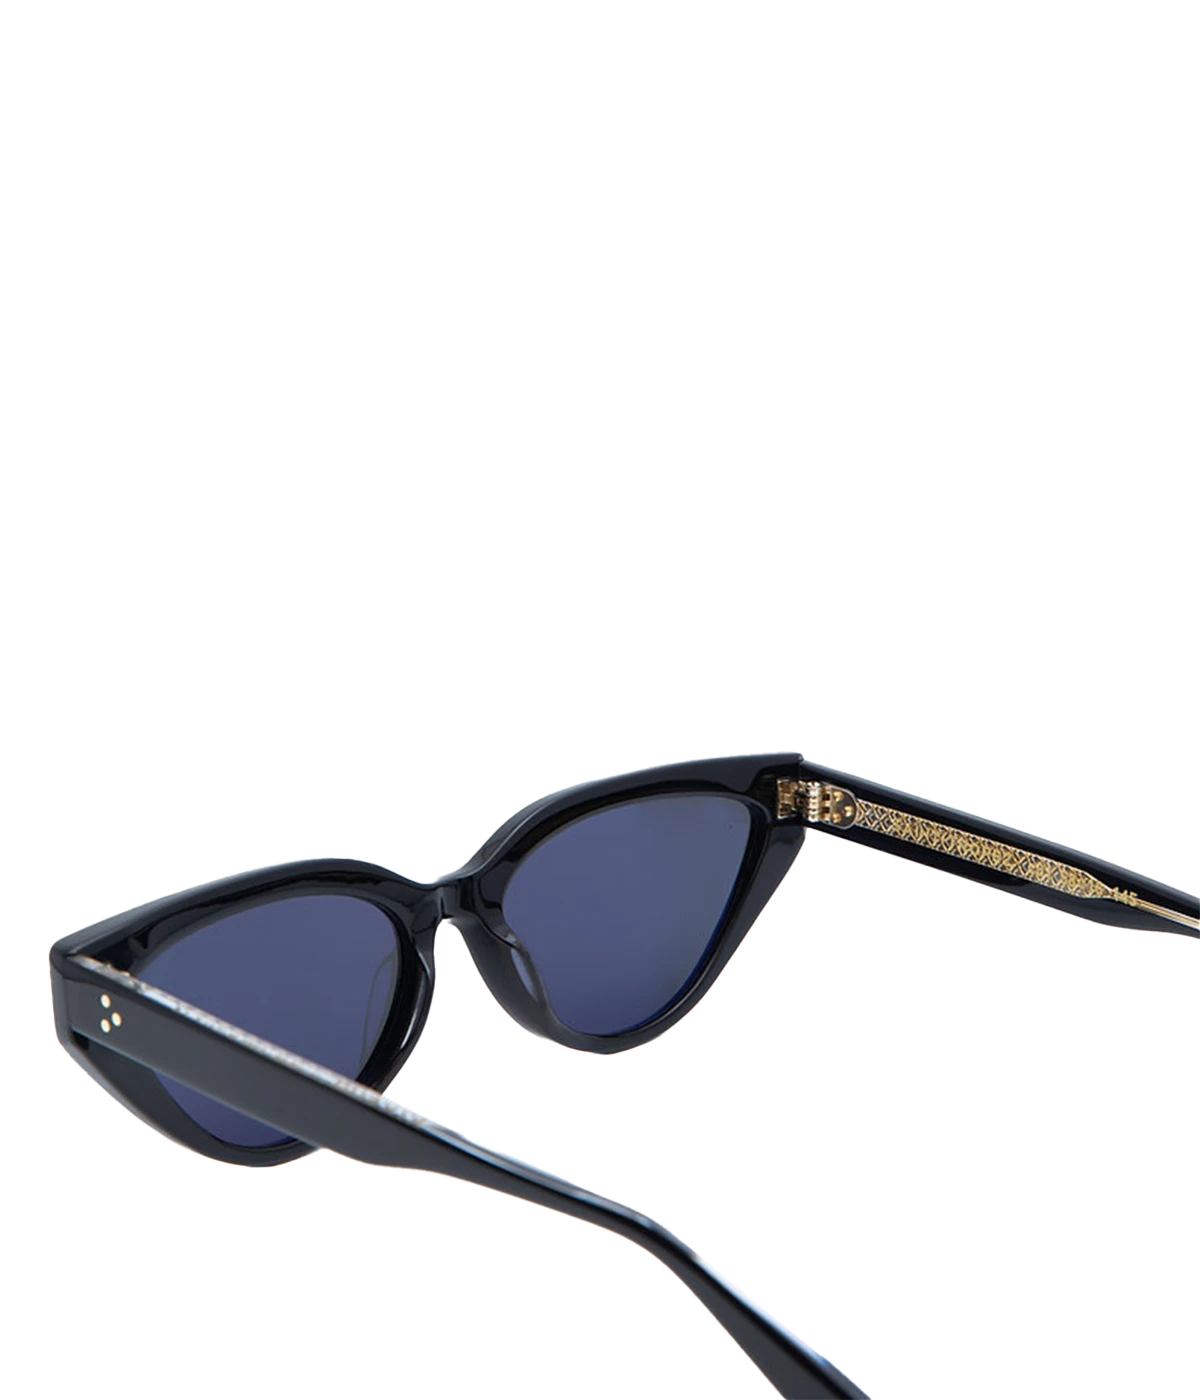 Saint Tropez Sunglasses in Black & Zero Flash